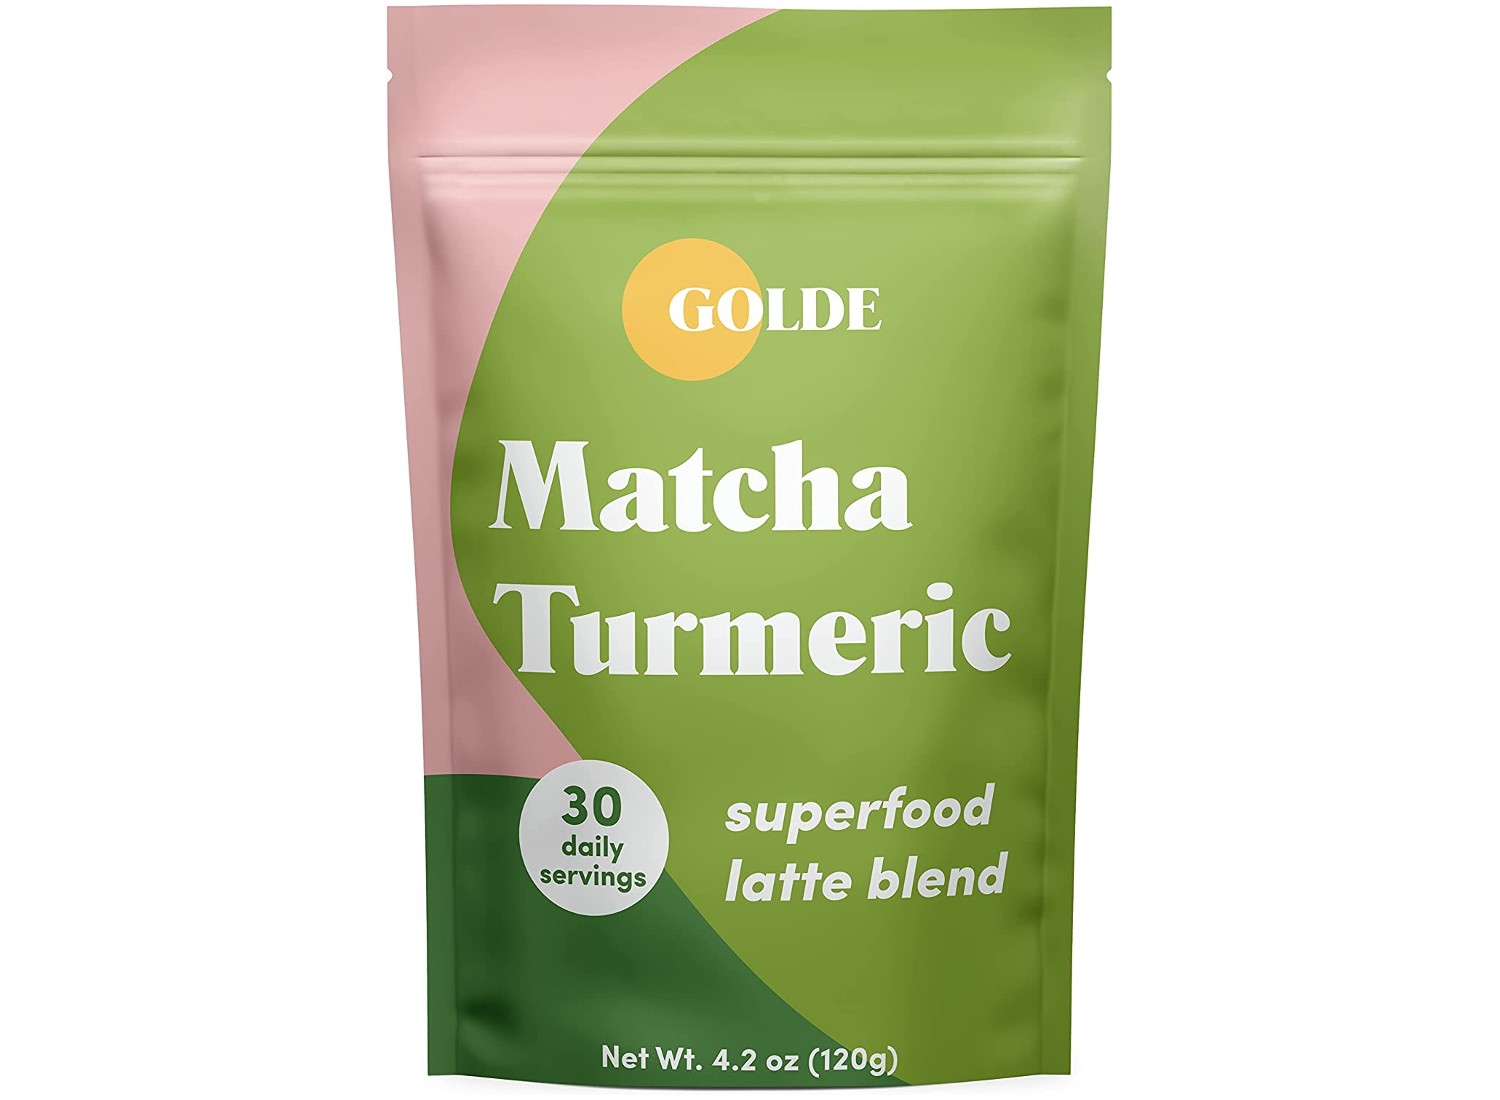 Matcha turmeric superfood latte mix